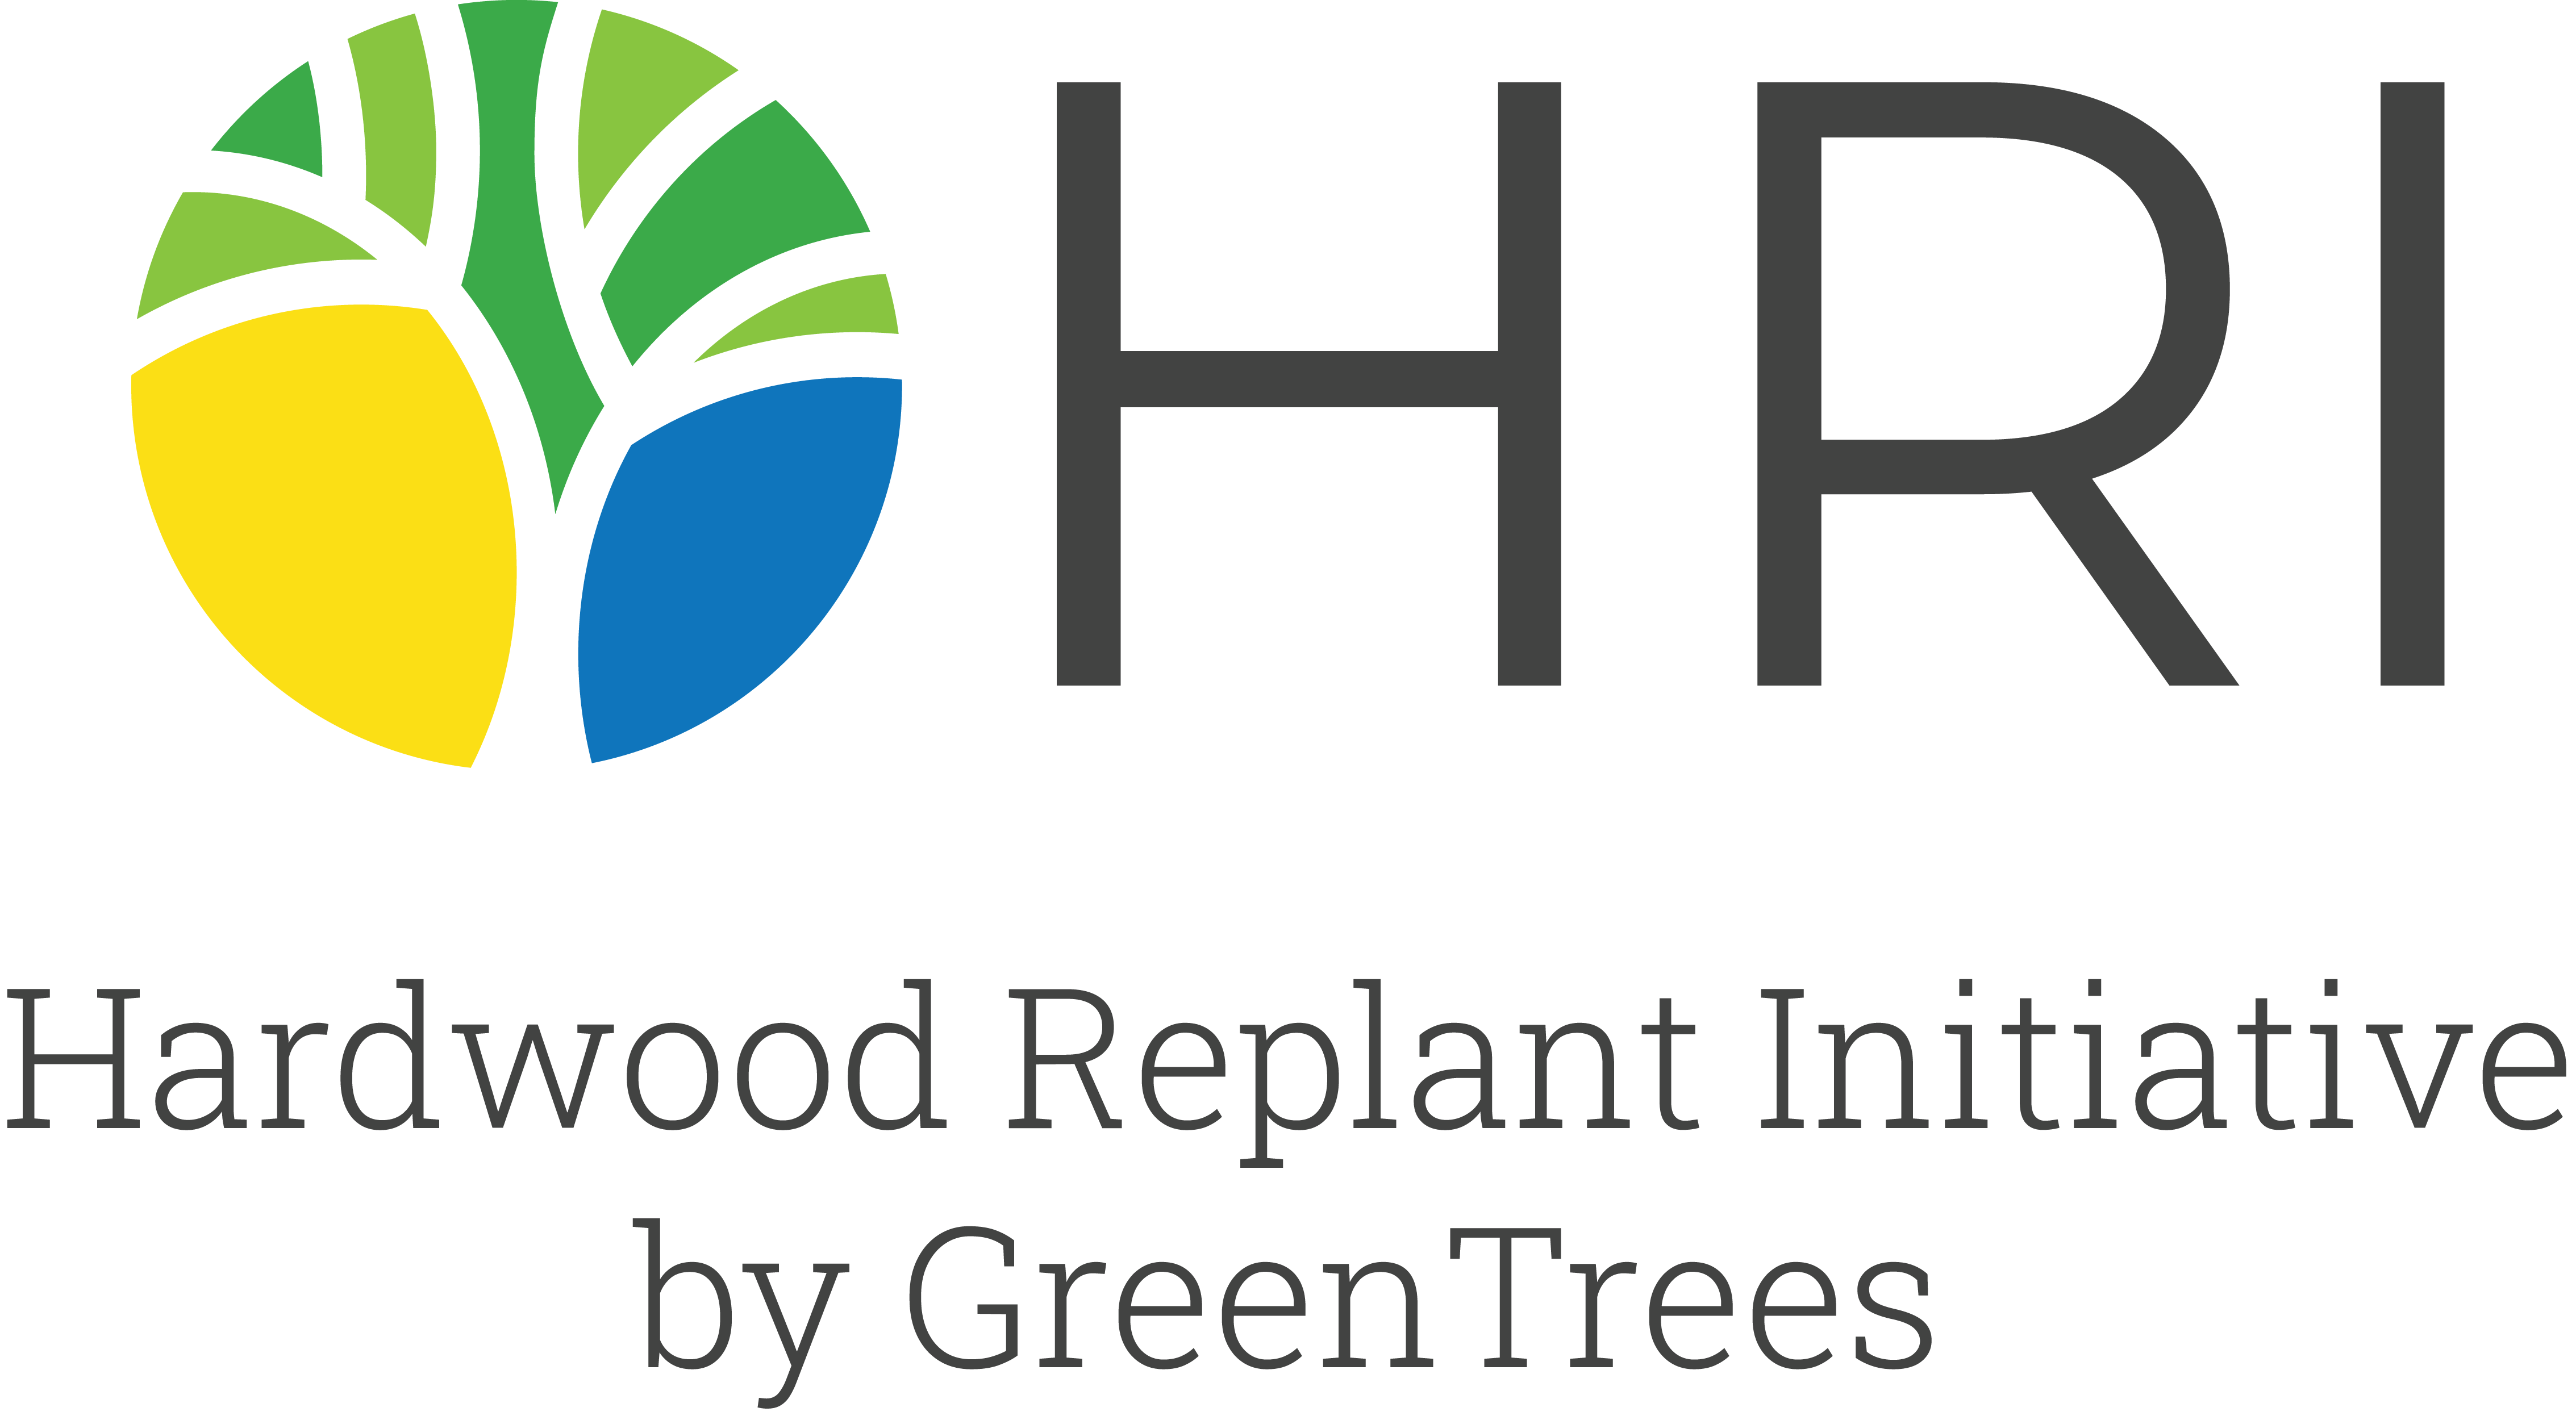 Hardwood Replant Initiative